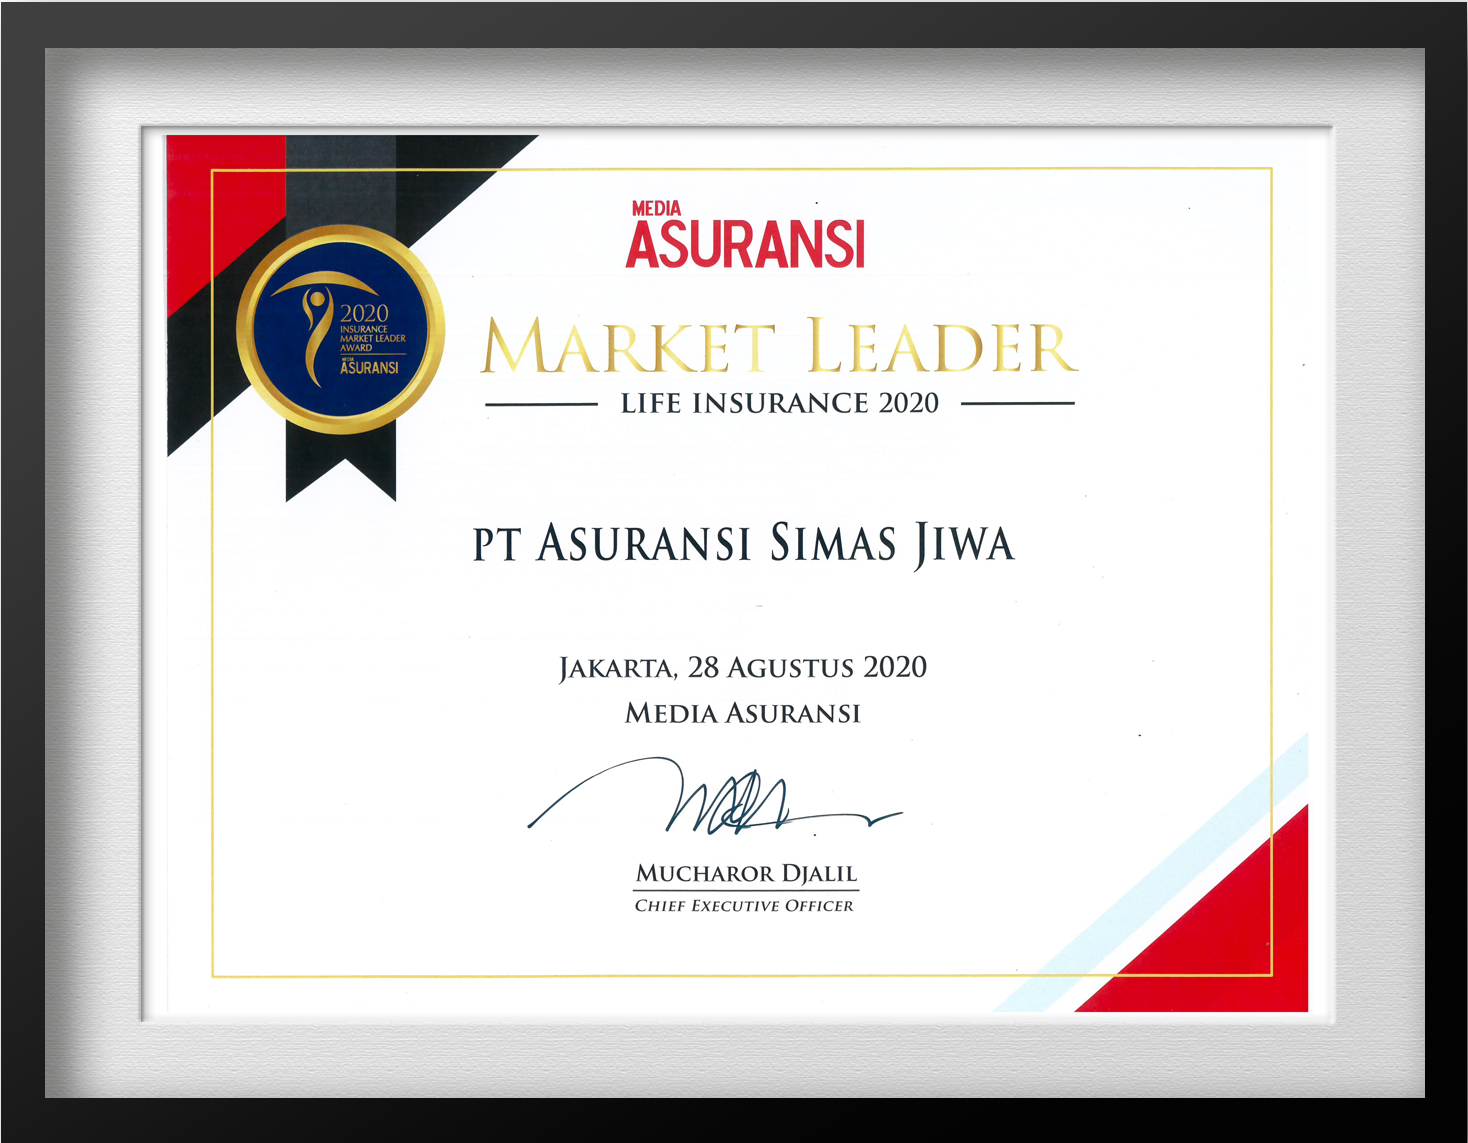 /resources/images/about/penghargaan/2020 MEDIA ASURANSI MARKET LEADER AWARD WEBSITE.png